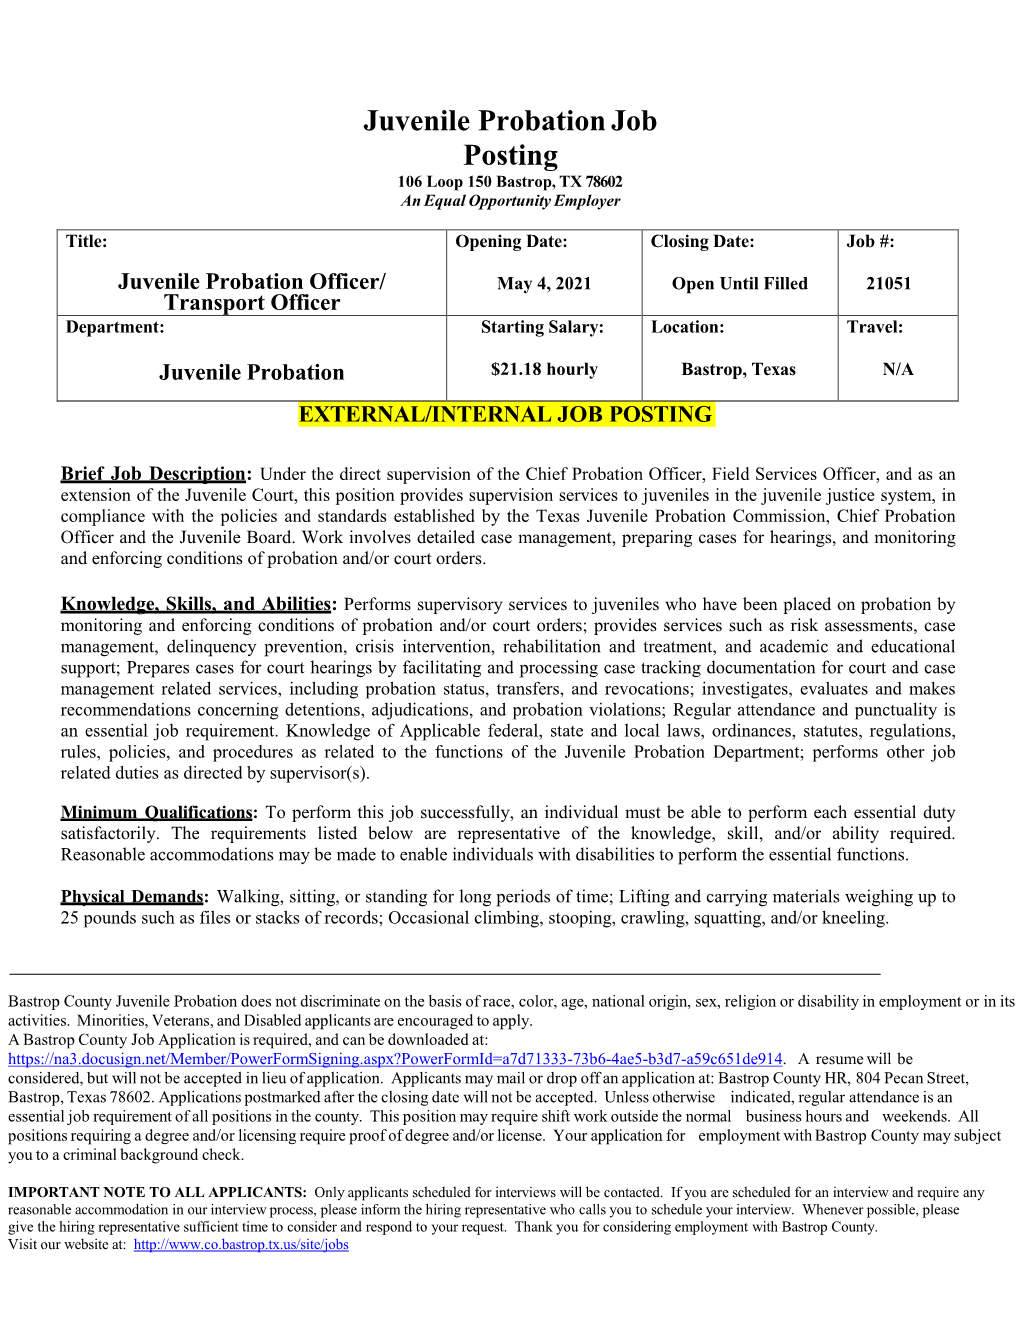 Juvenile Probation Job Posting 106 Loop 150 Bastrop, TX 78602 an Equal Opportunity Employer